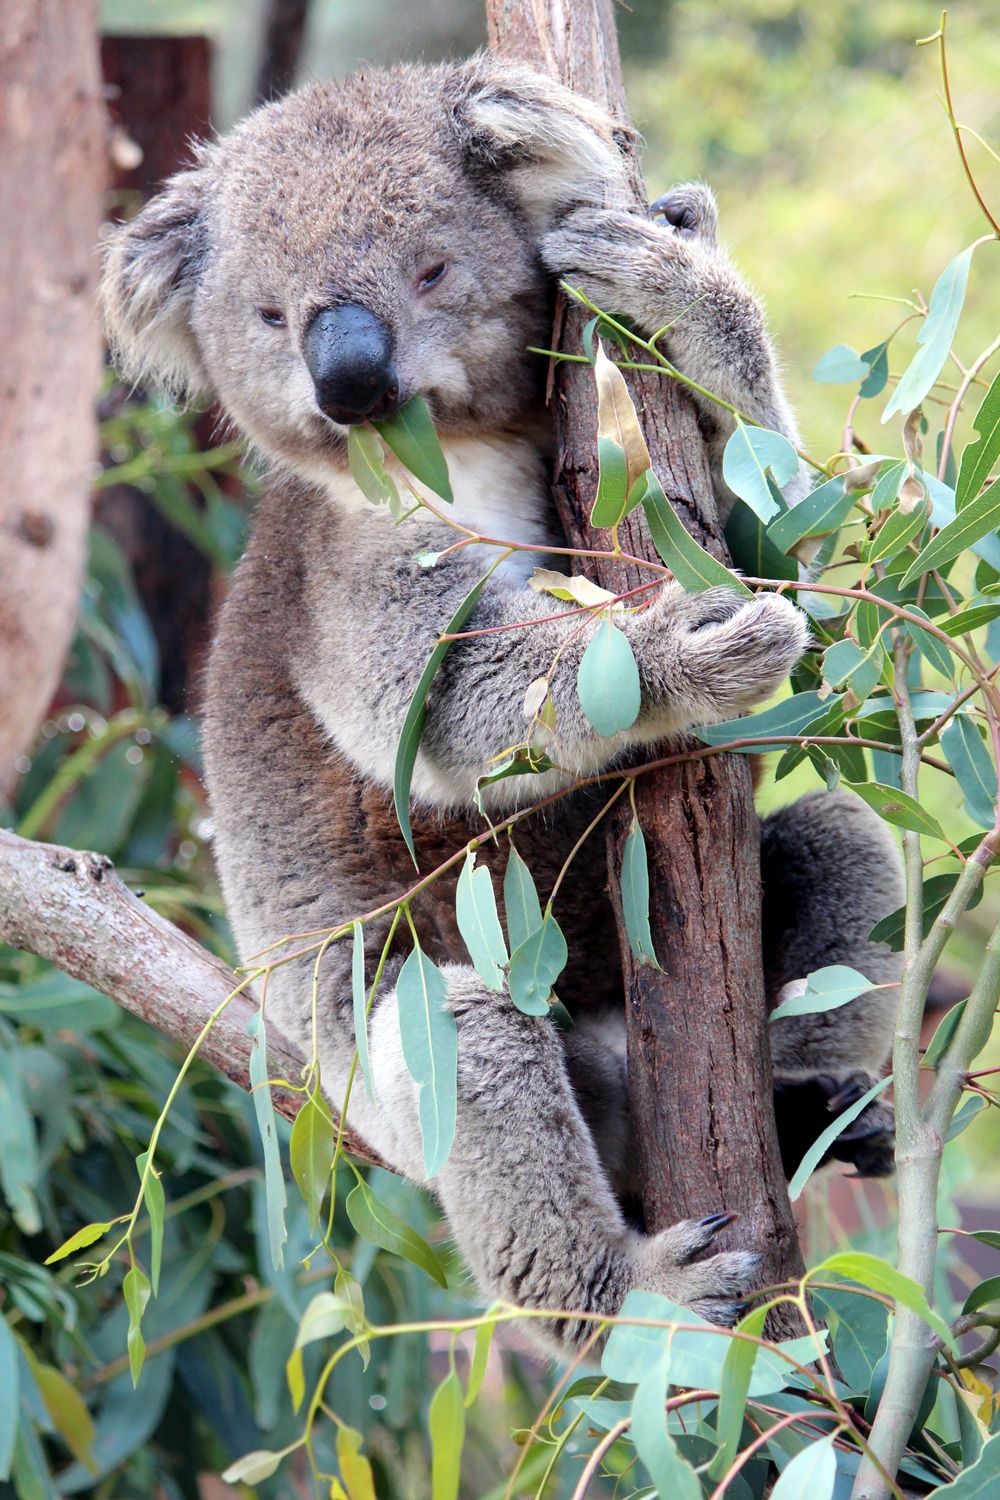 Australian wildlife: Koala eating gum leaves in a tree at Healesville Sanctuary.